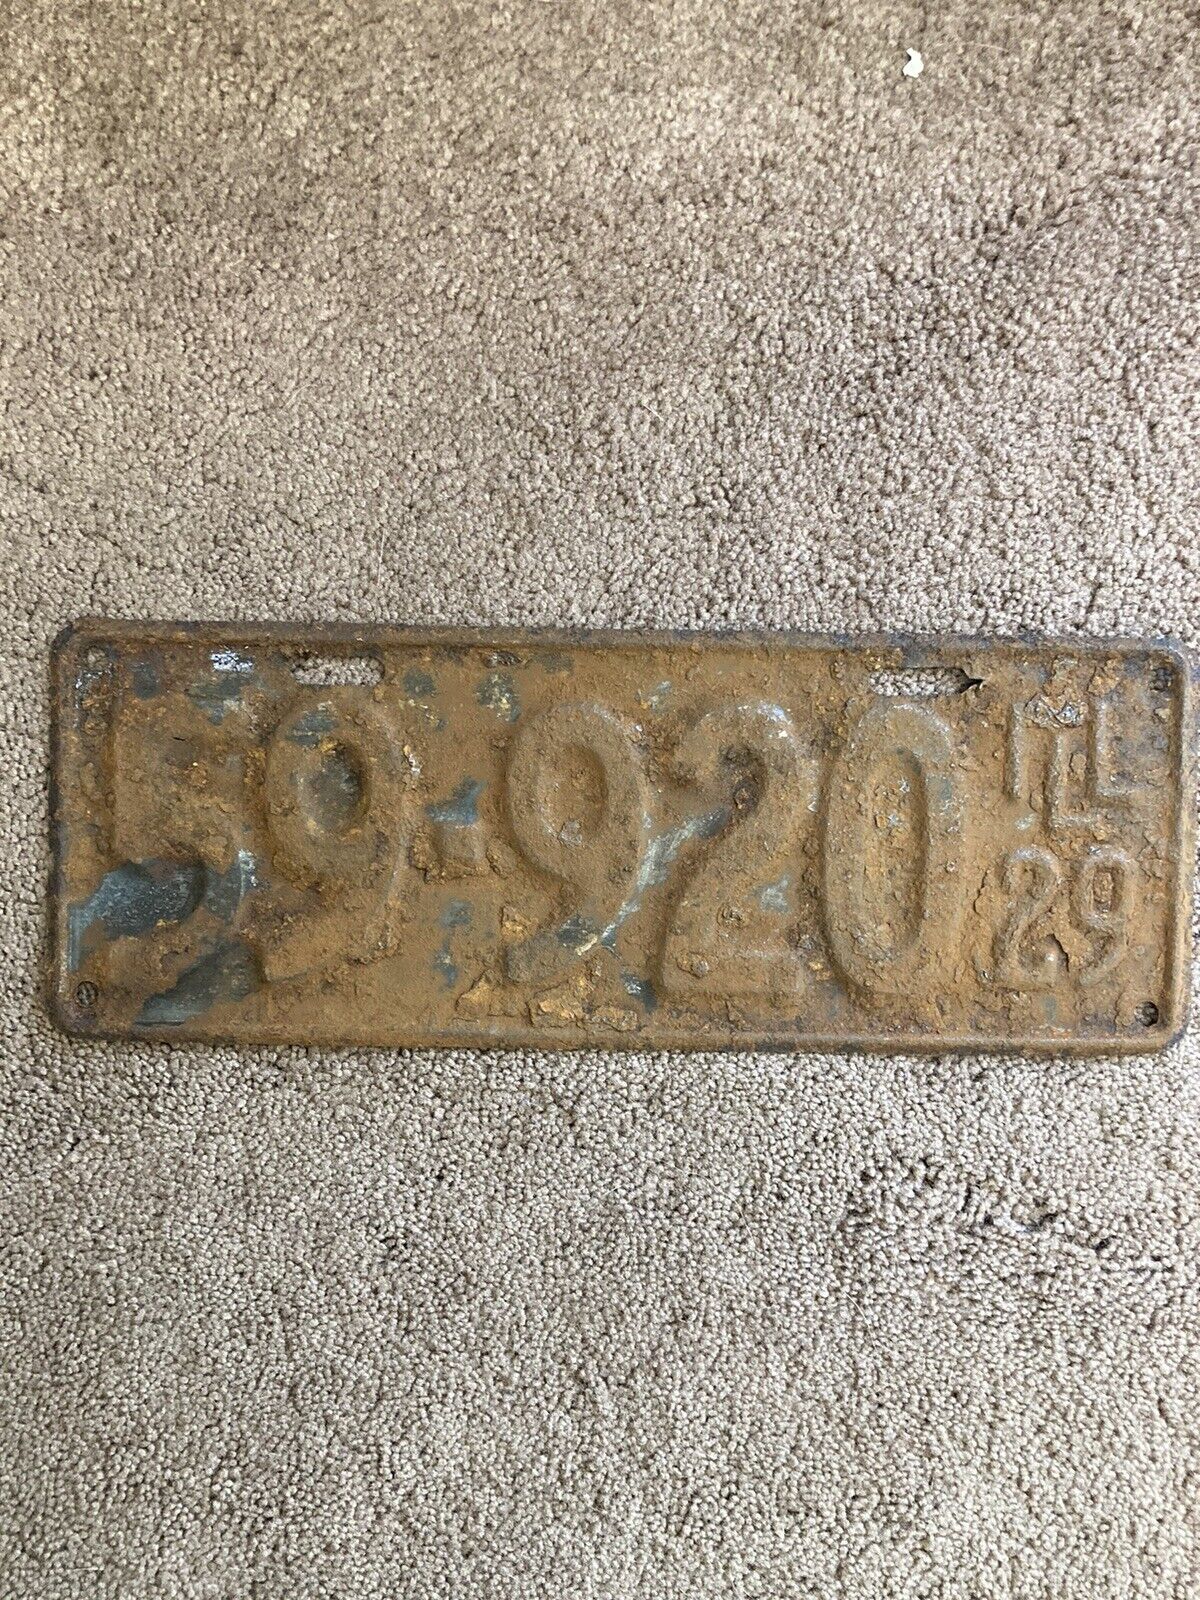 1929 Illinois License Plate - 59 920 - Rustic